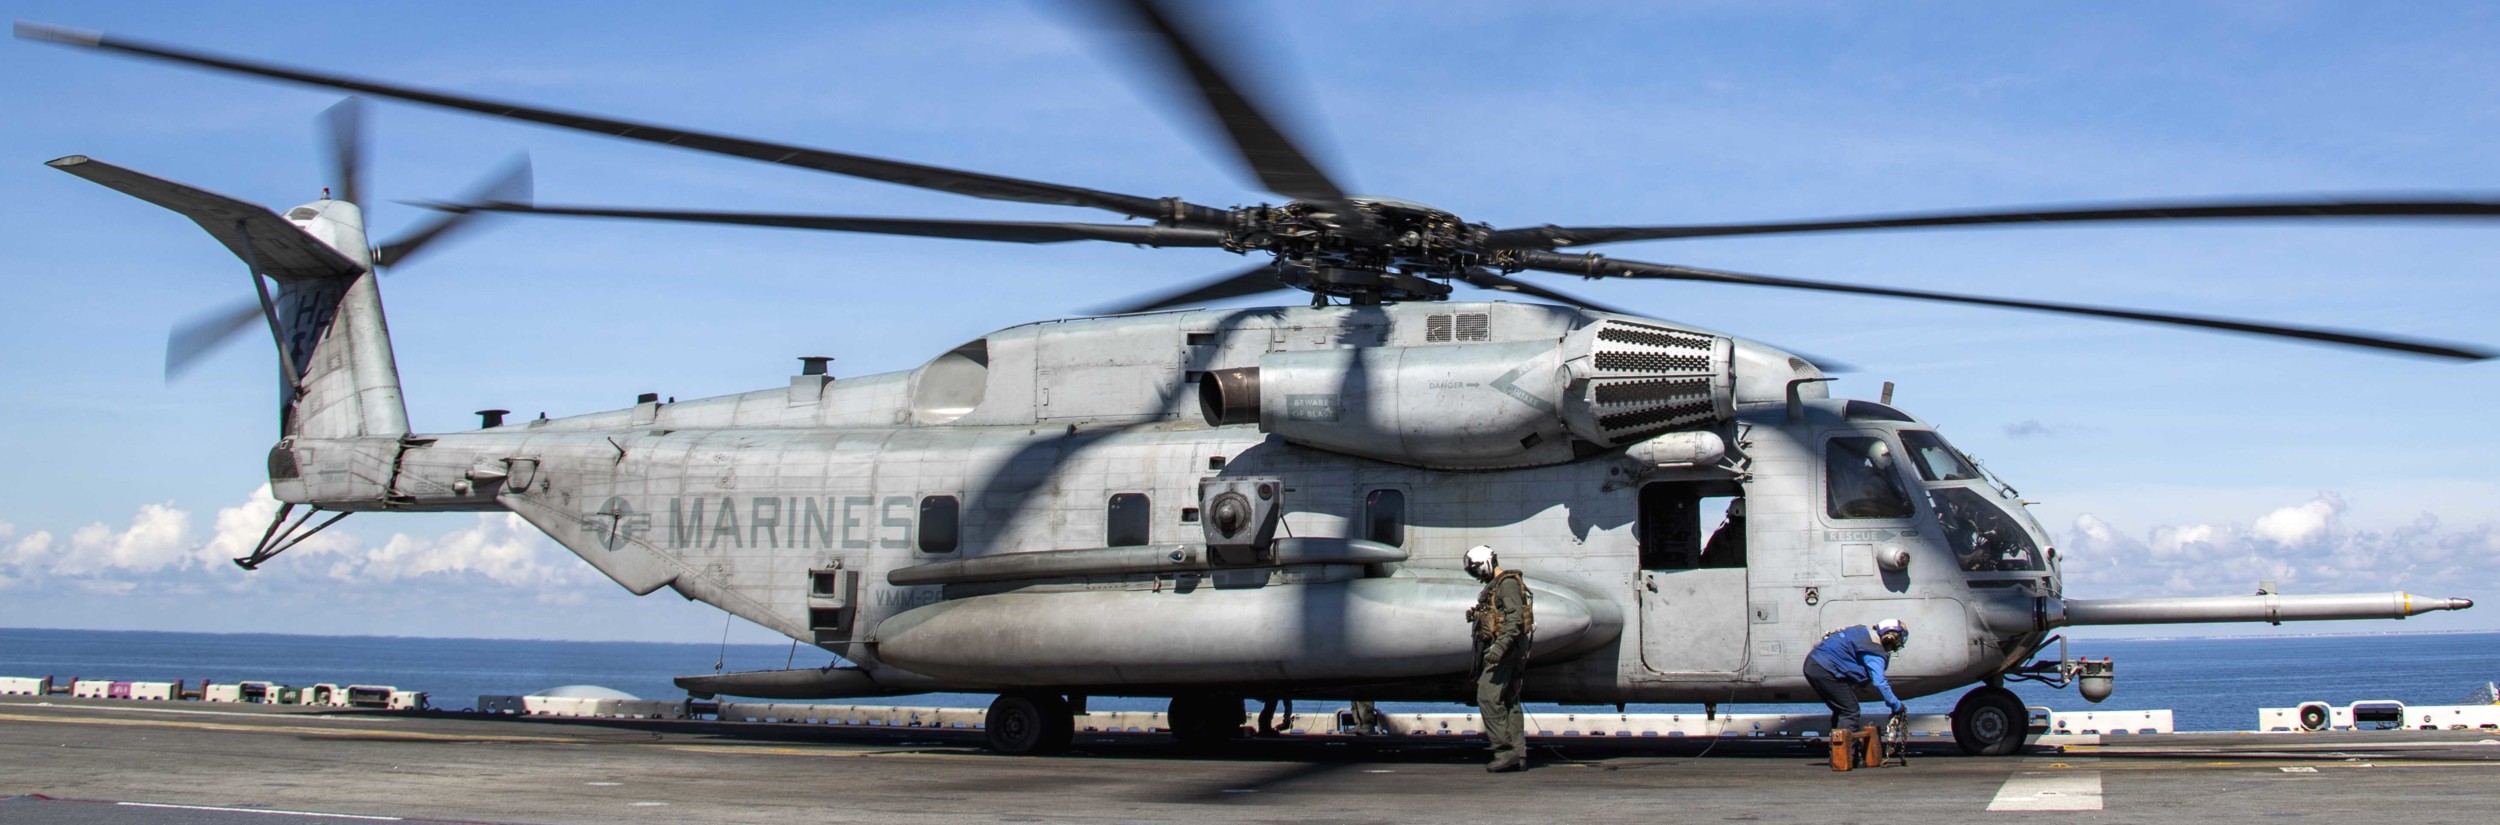 hmh-366 hammerheads ch-53e super stallion marine heavy helicopter squadron usmc lhd-3 uss kearsarge 133